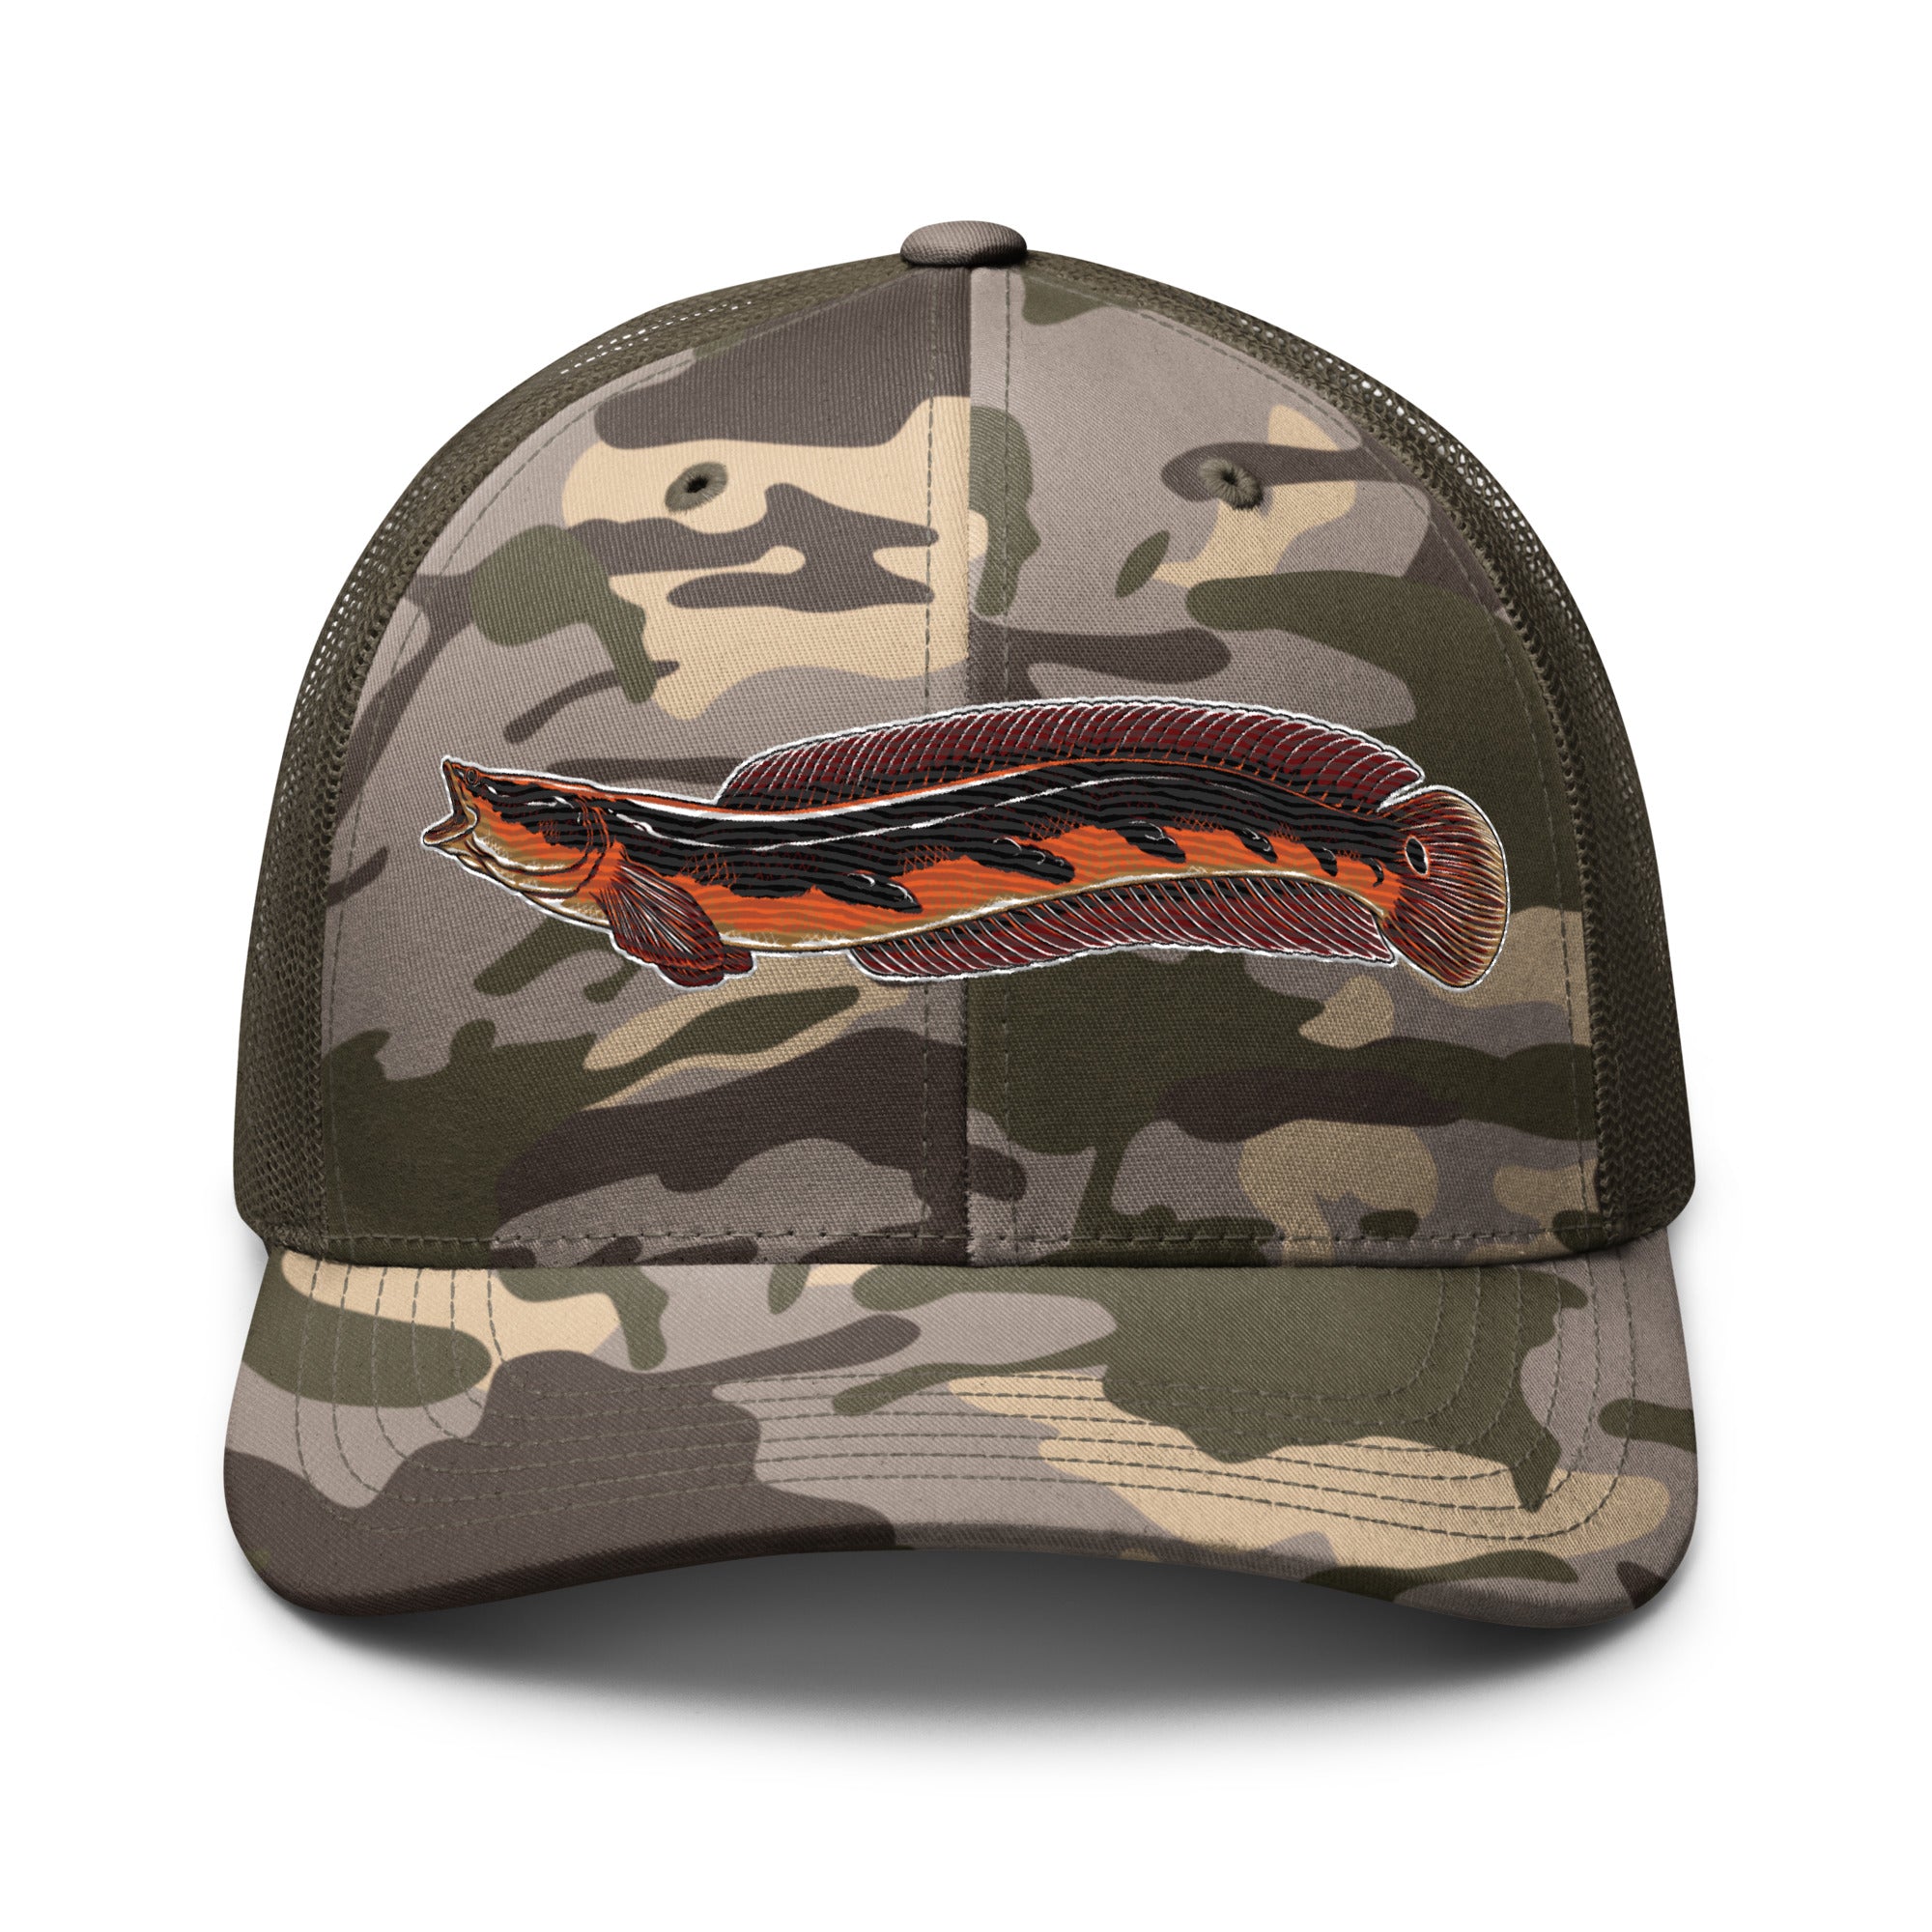 Camouflage trucker hat- Bullseye Snakehead